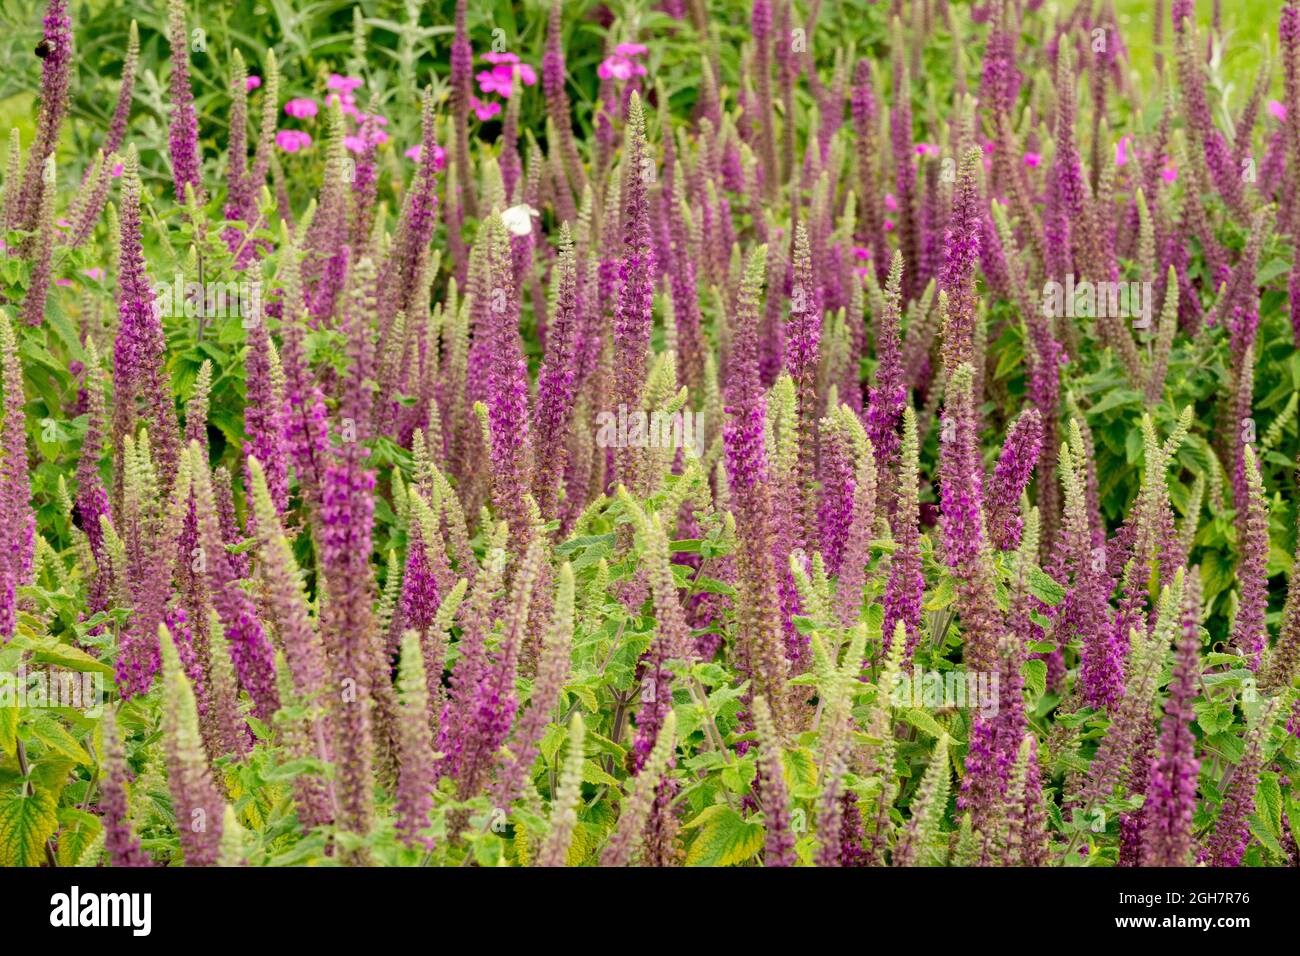 Caucasian Germander flower Teucrium hircanicum herbaceous perennials mid-summer Stock Photo